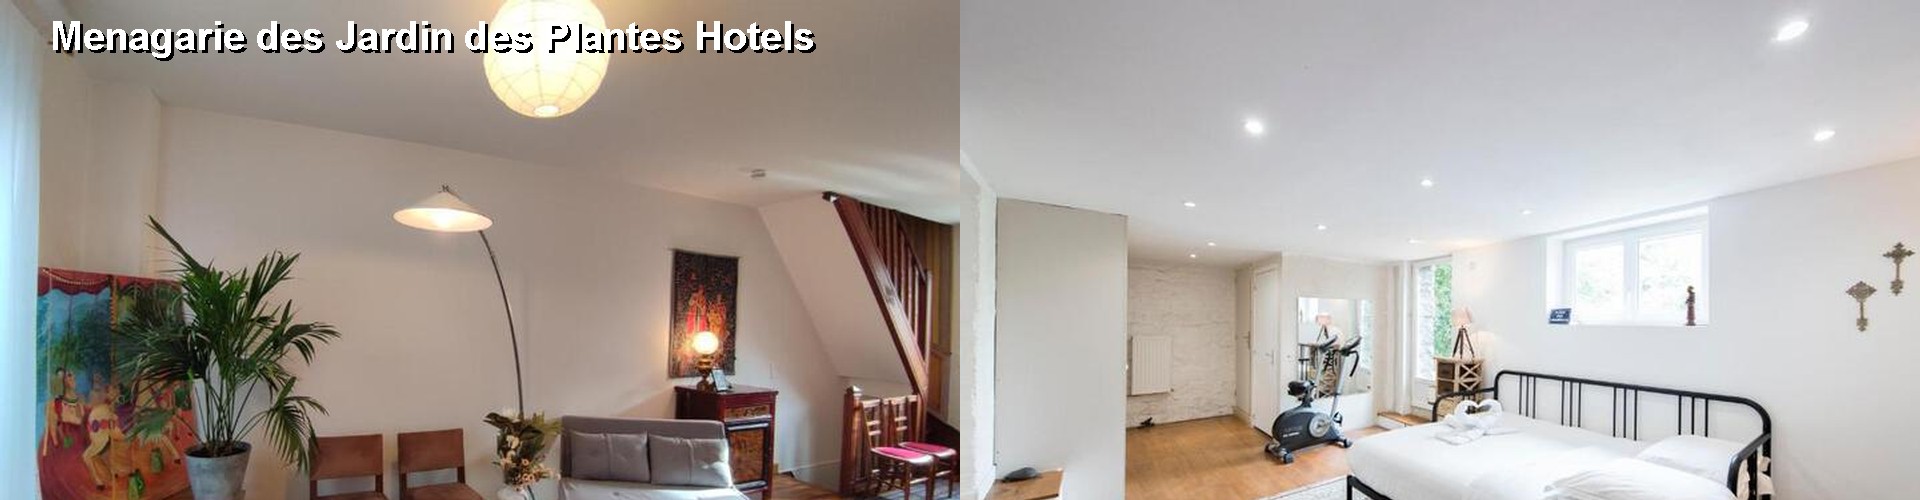 5 Best Hotels near Menagarie des Jardin des Plantes